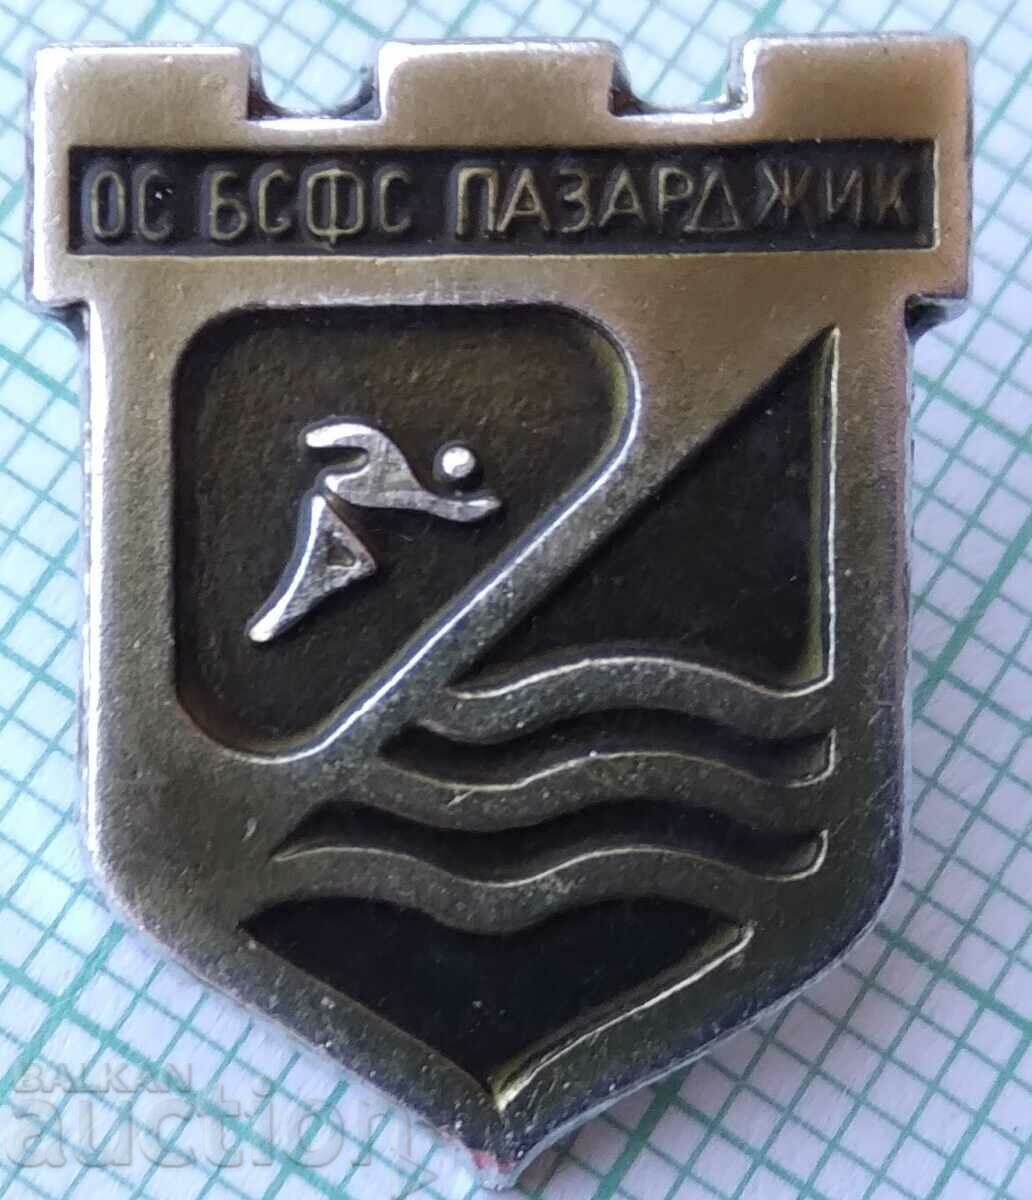 12655 Badge - OS of BSFS Pazardzhik